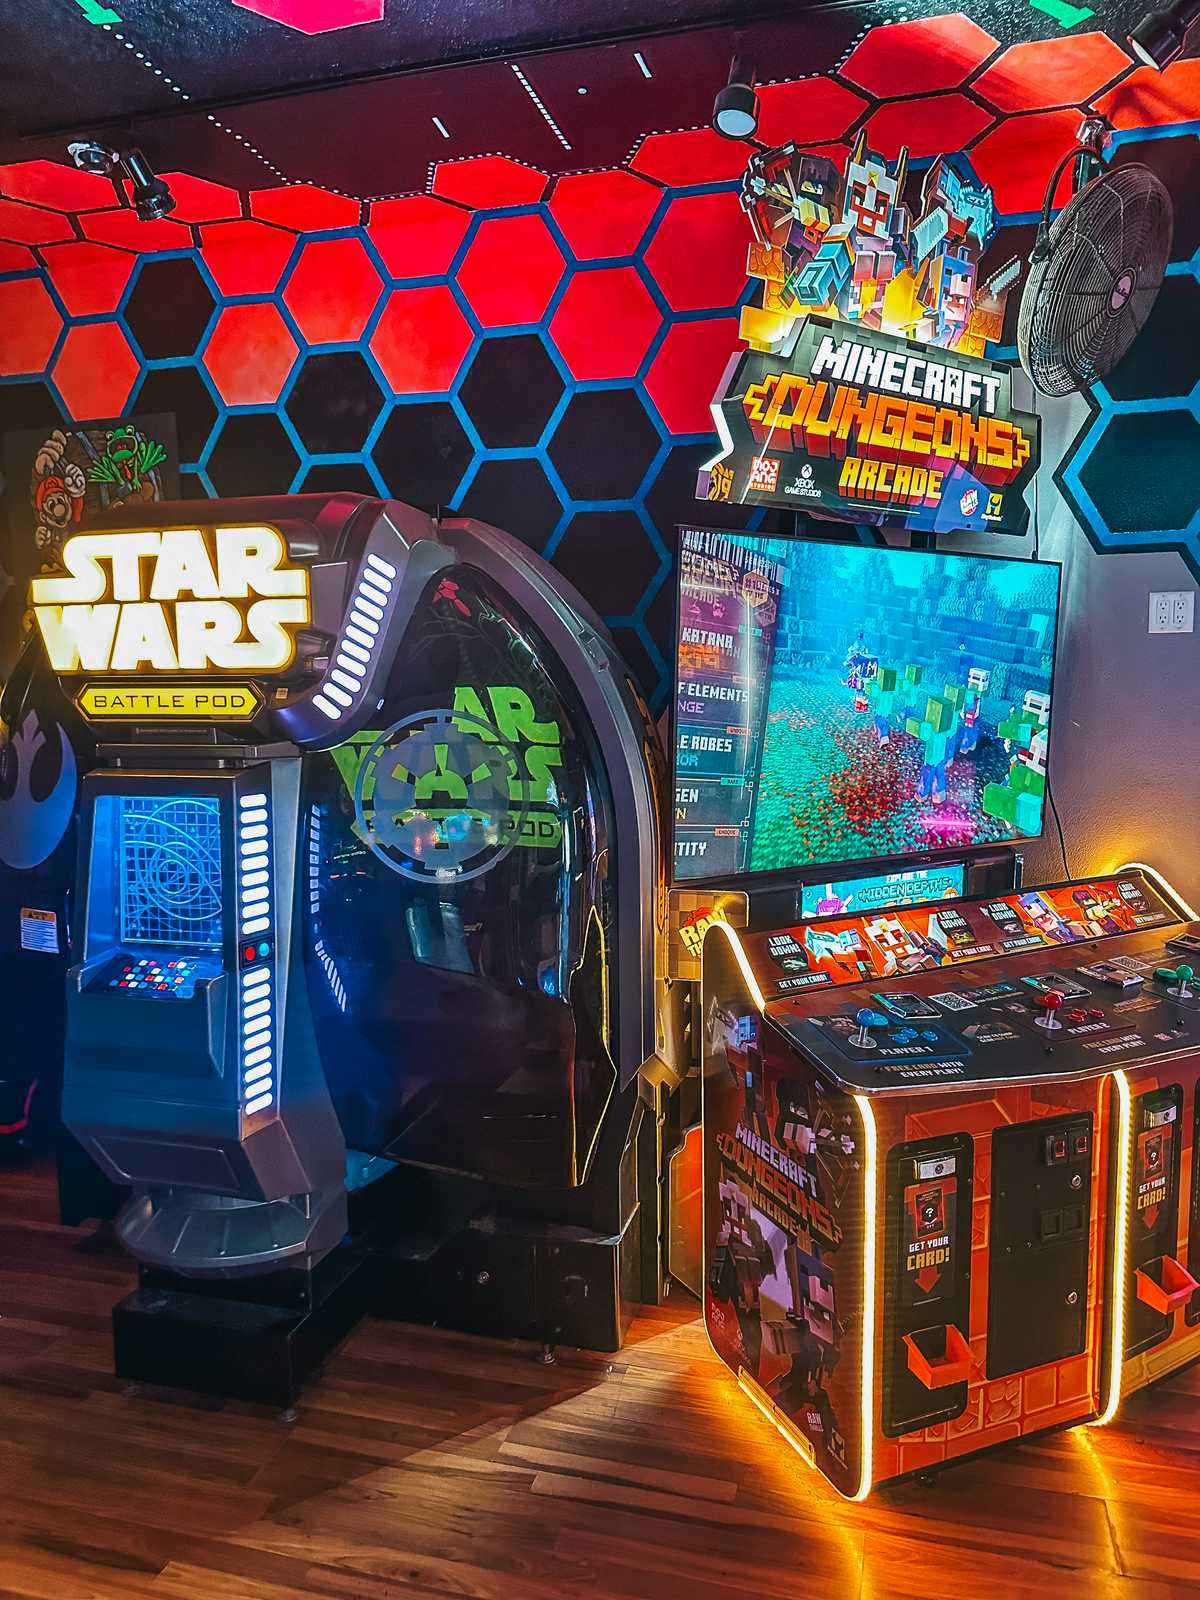 Reboot arcade bar in Dunedin